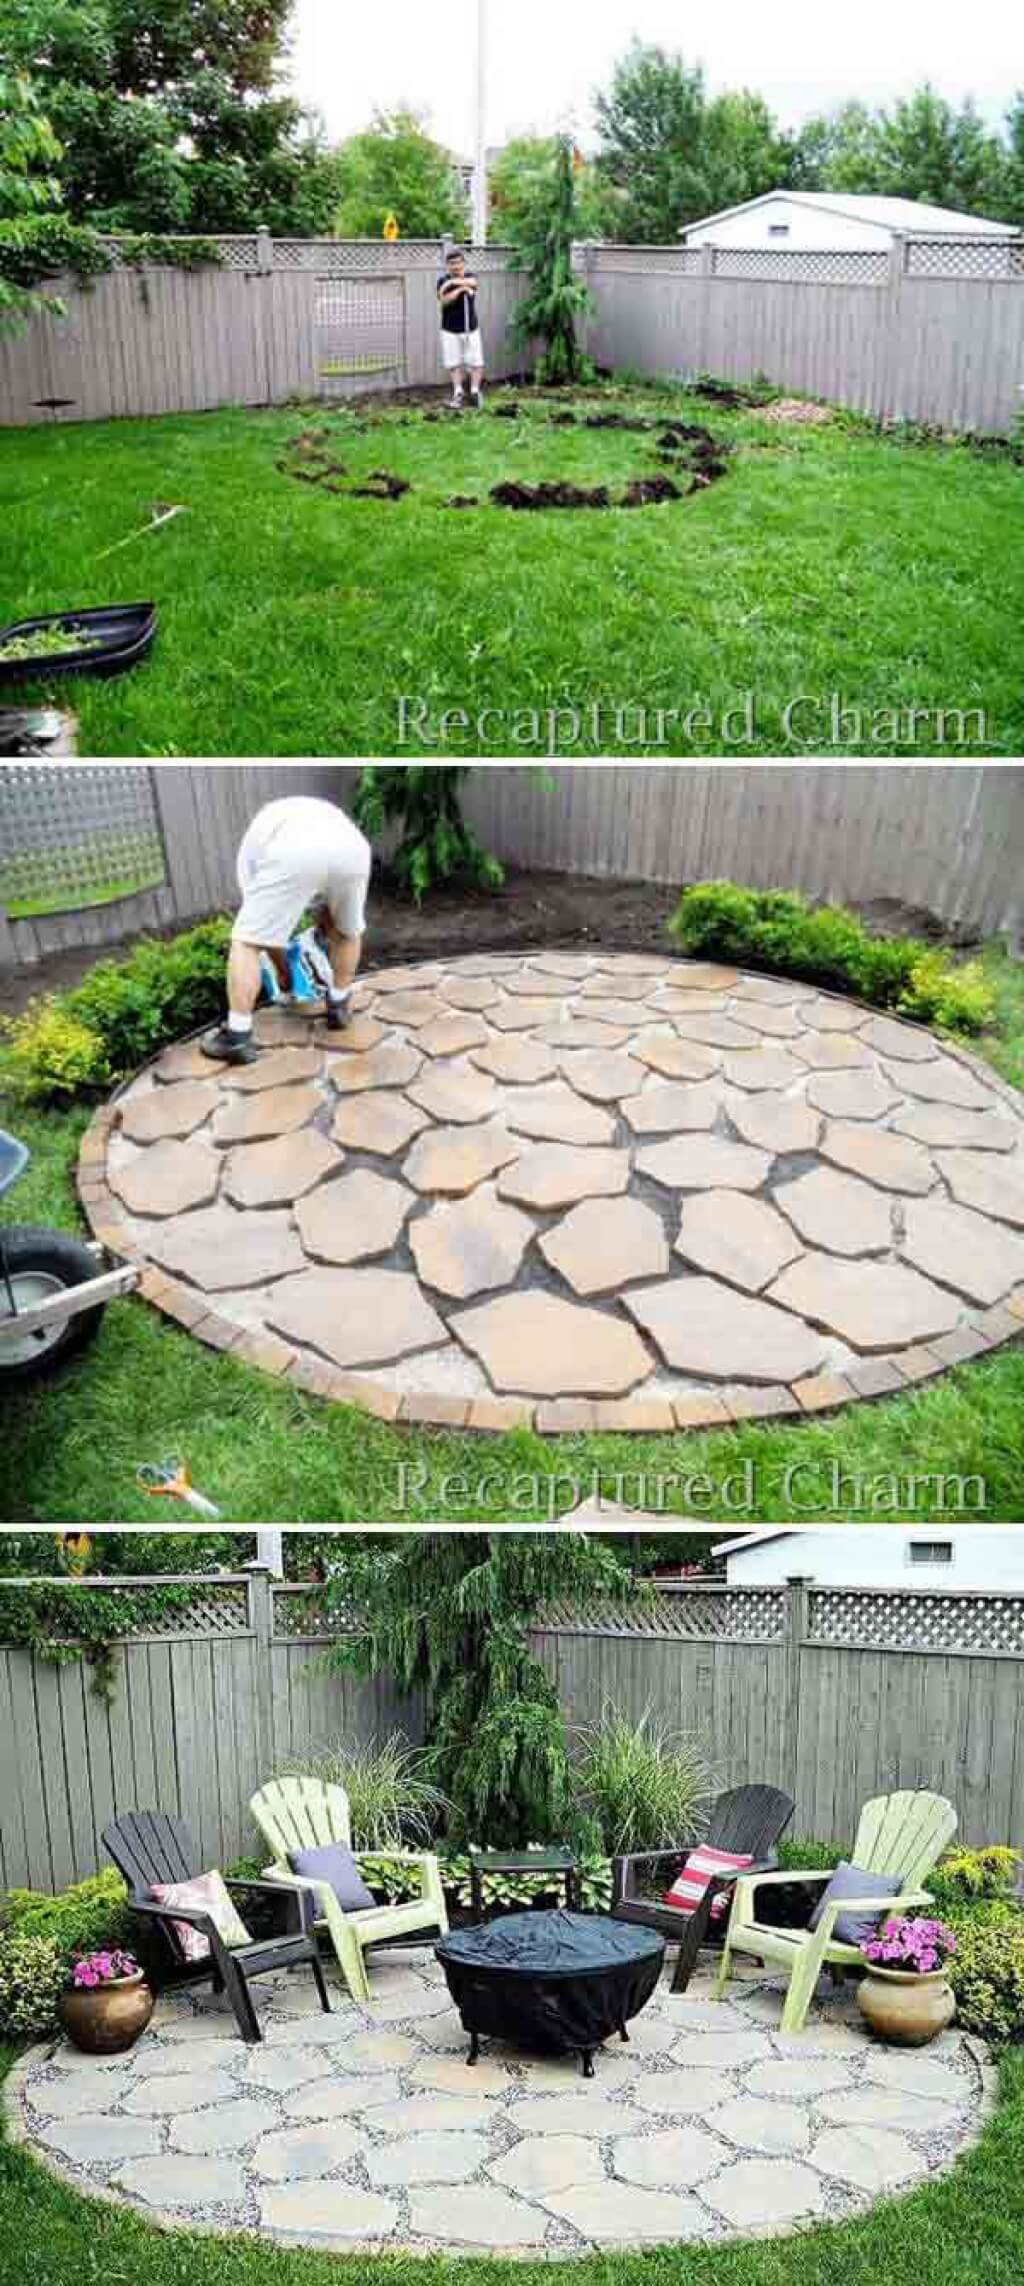 A Stone Patio for Backyard Entertainment